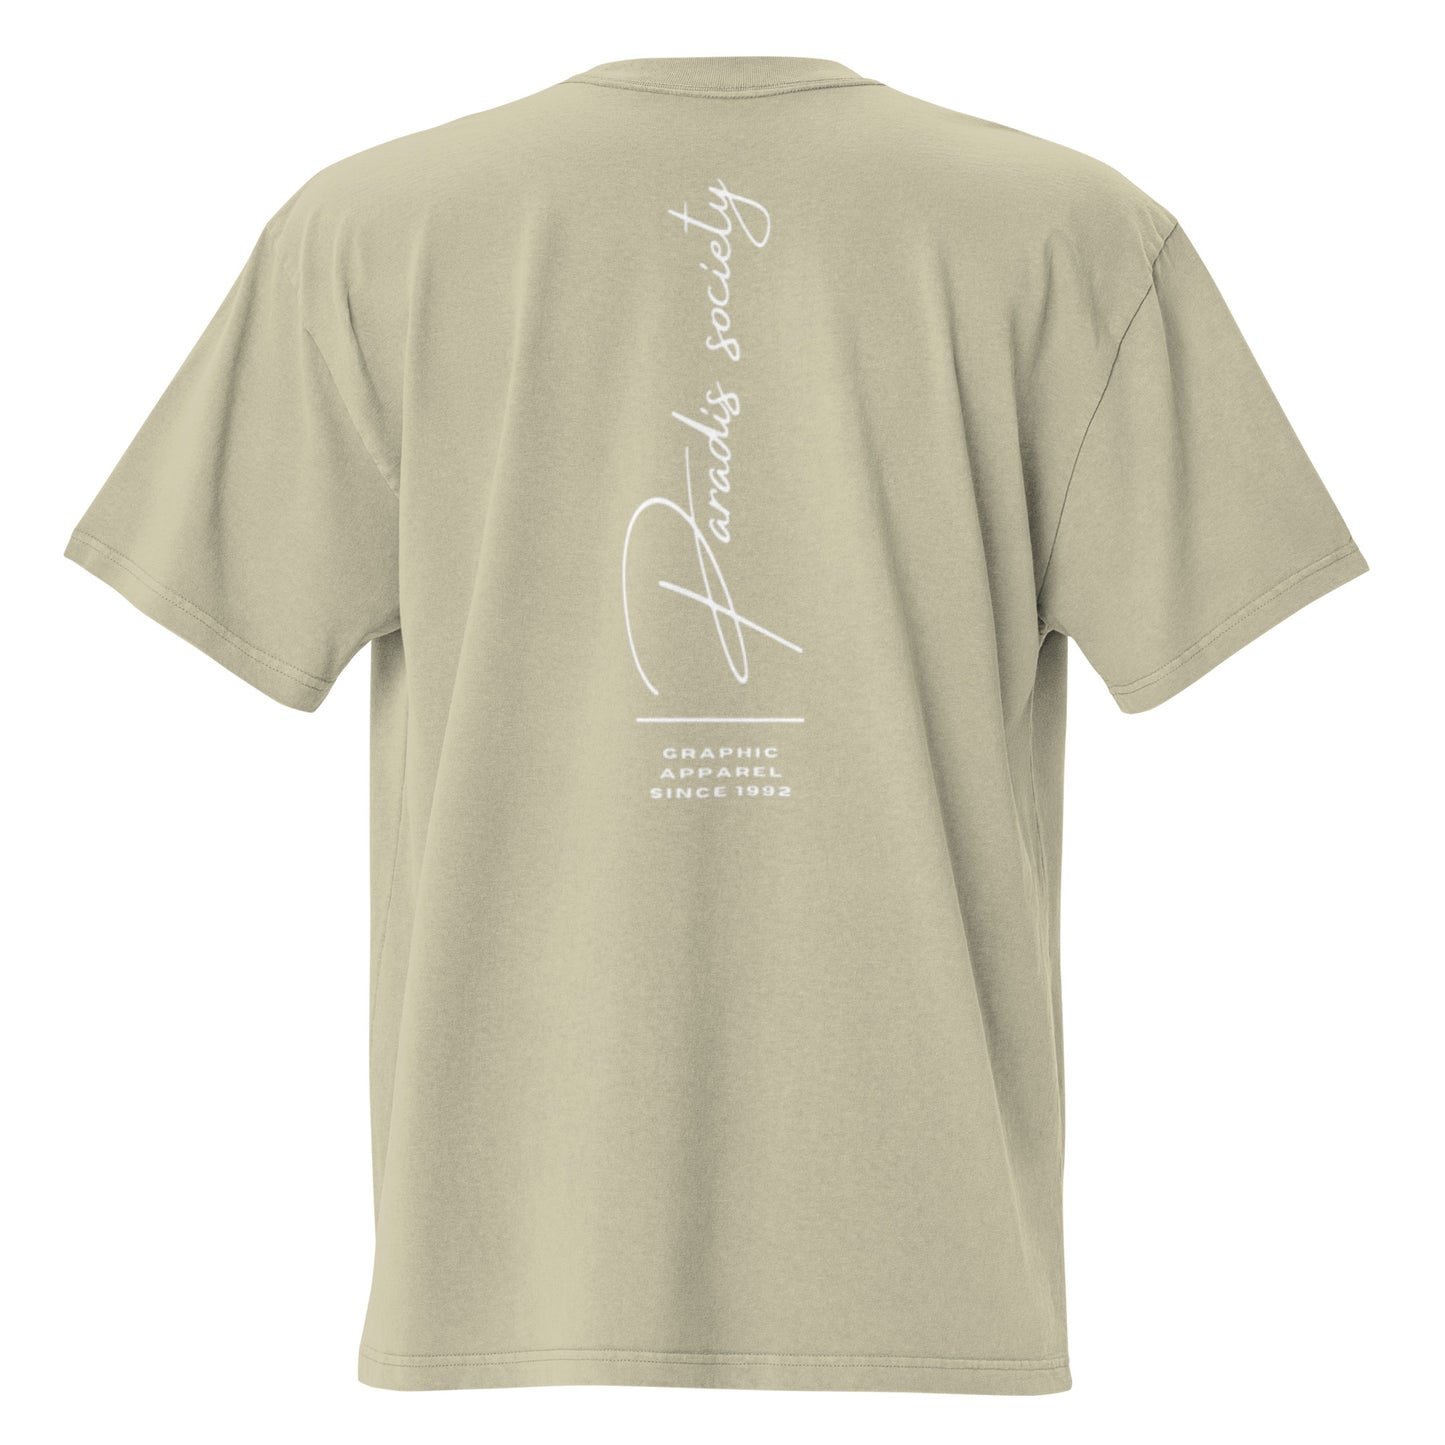 Oversized faded t-shirt Paradis Edition